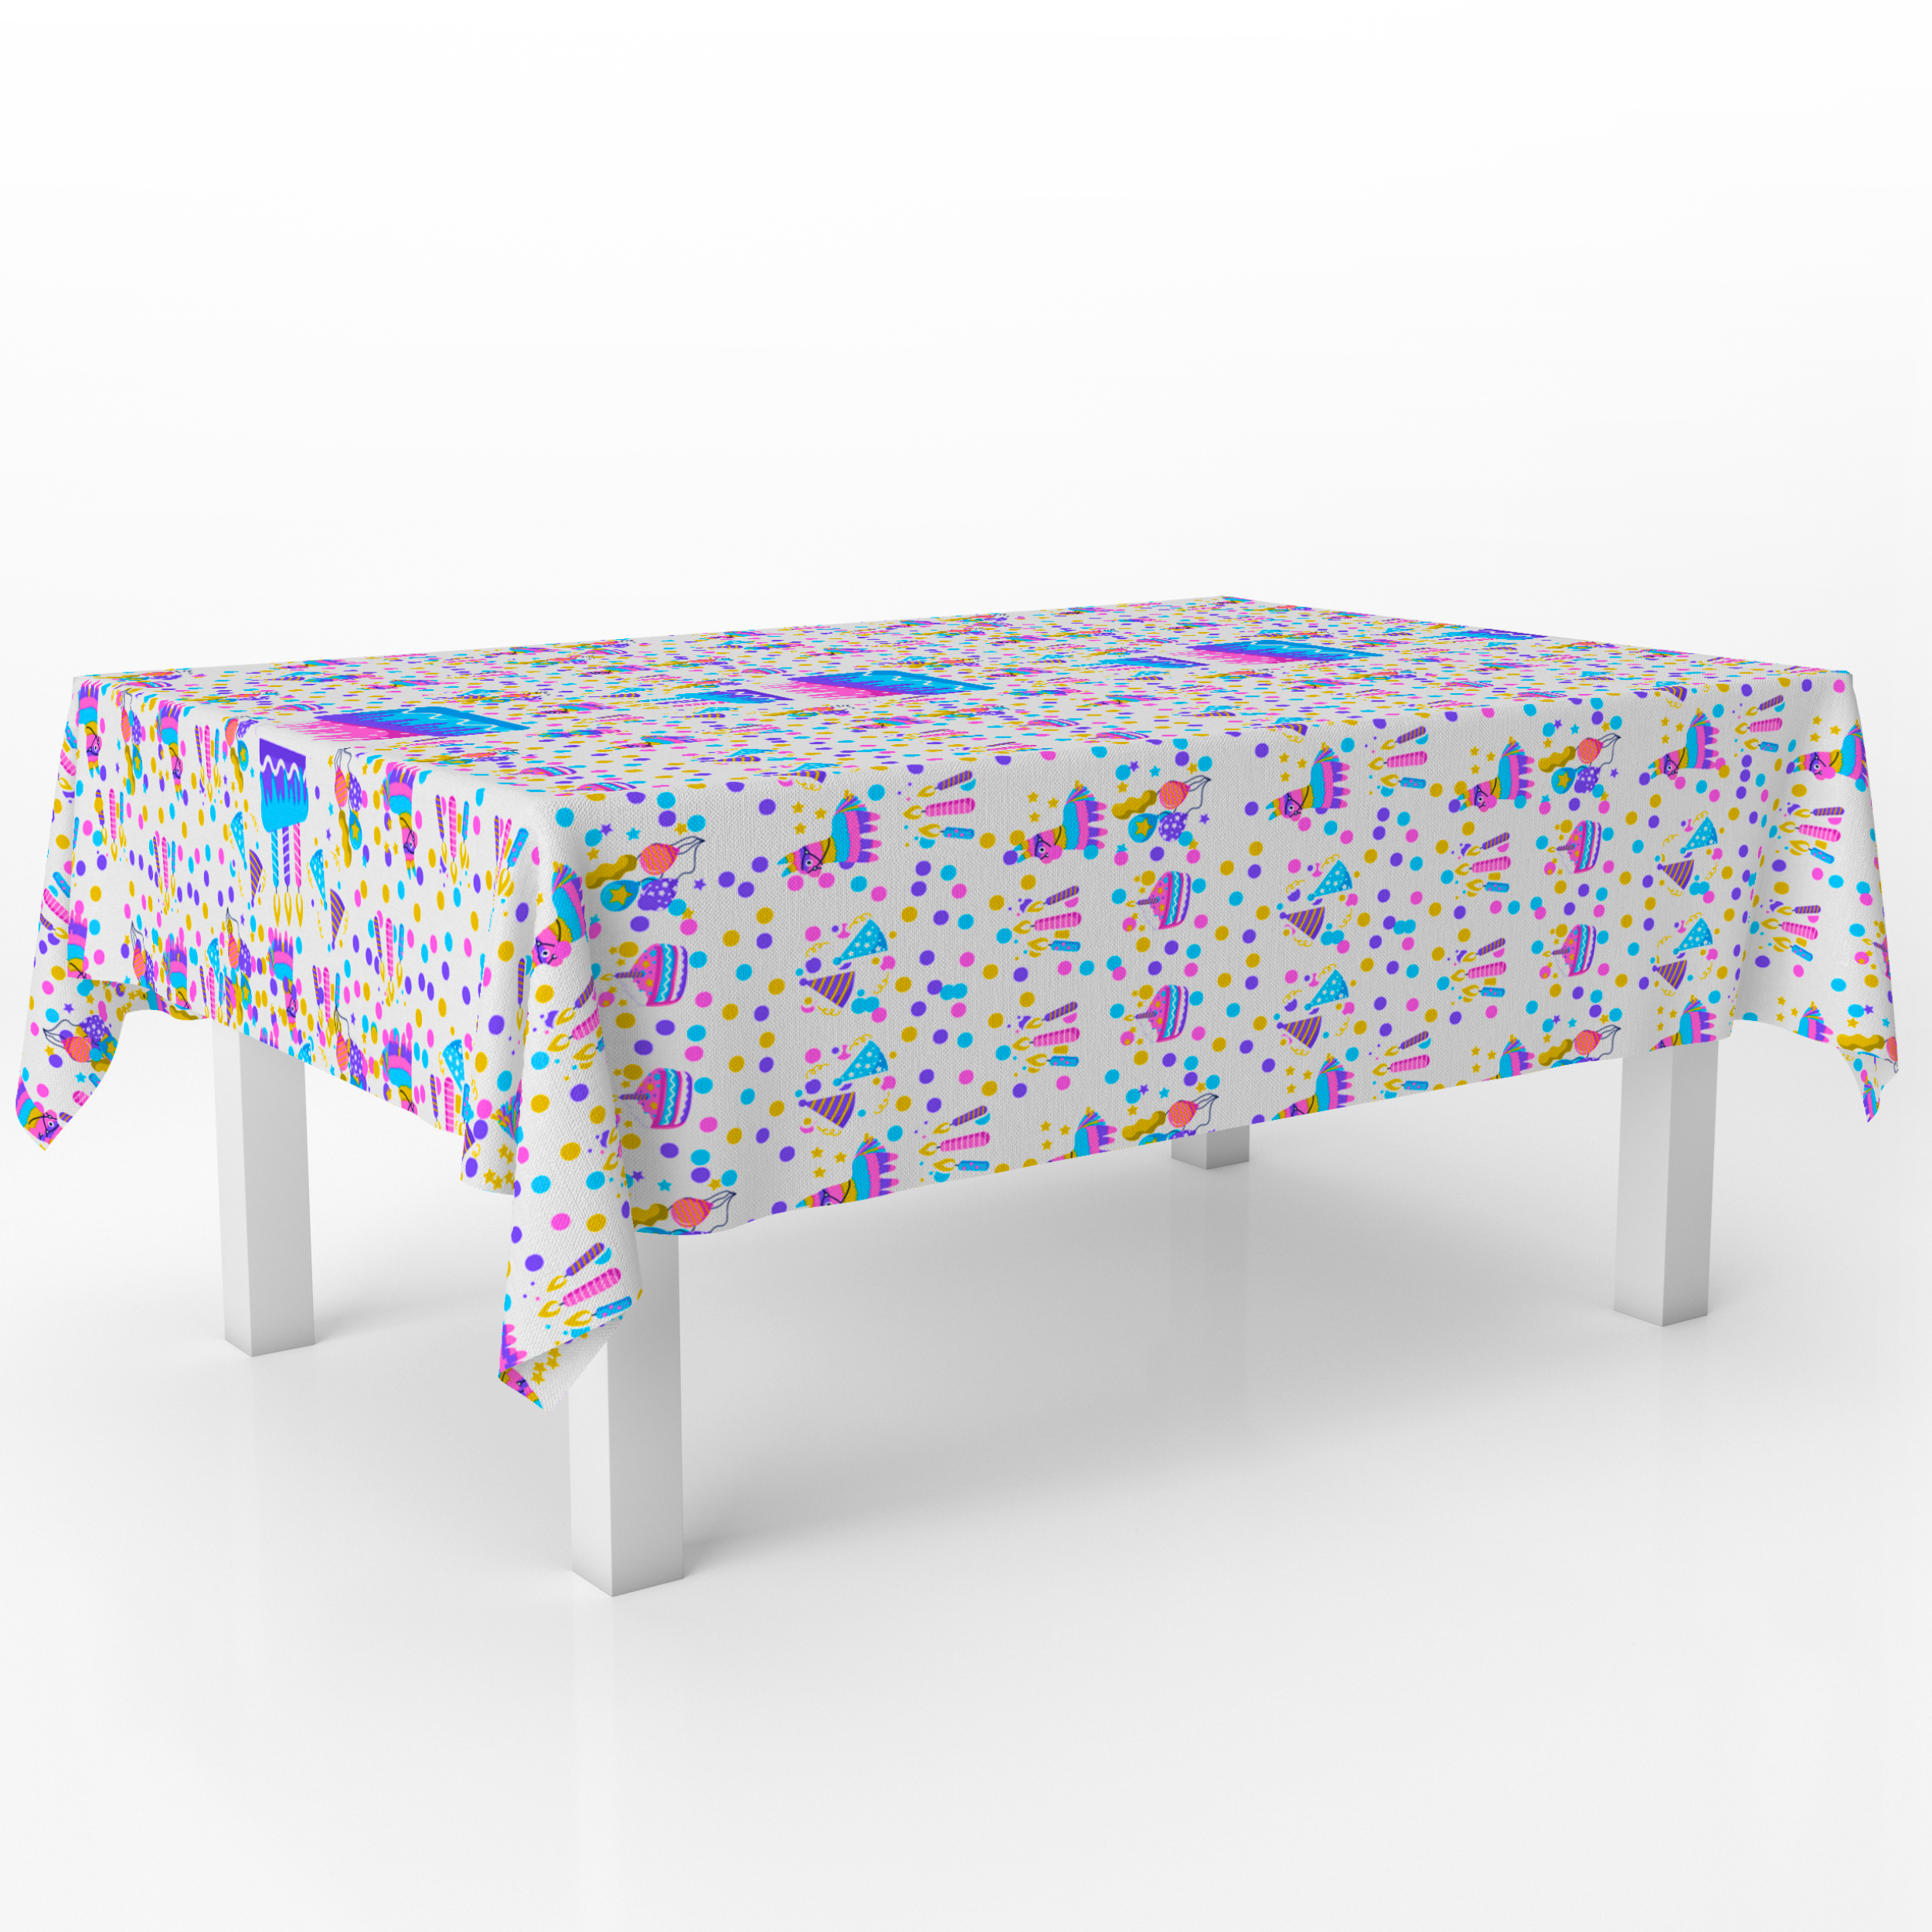 Grandipity's Party Unicorn Plastic Table Cover